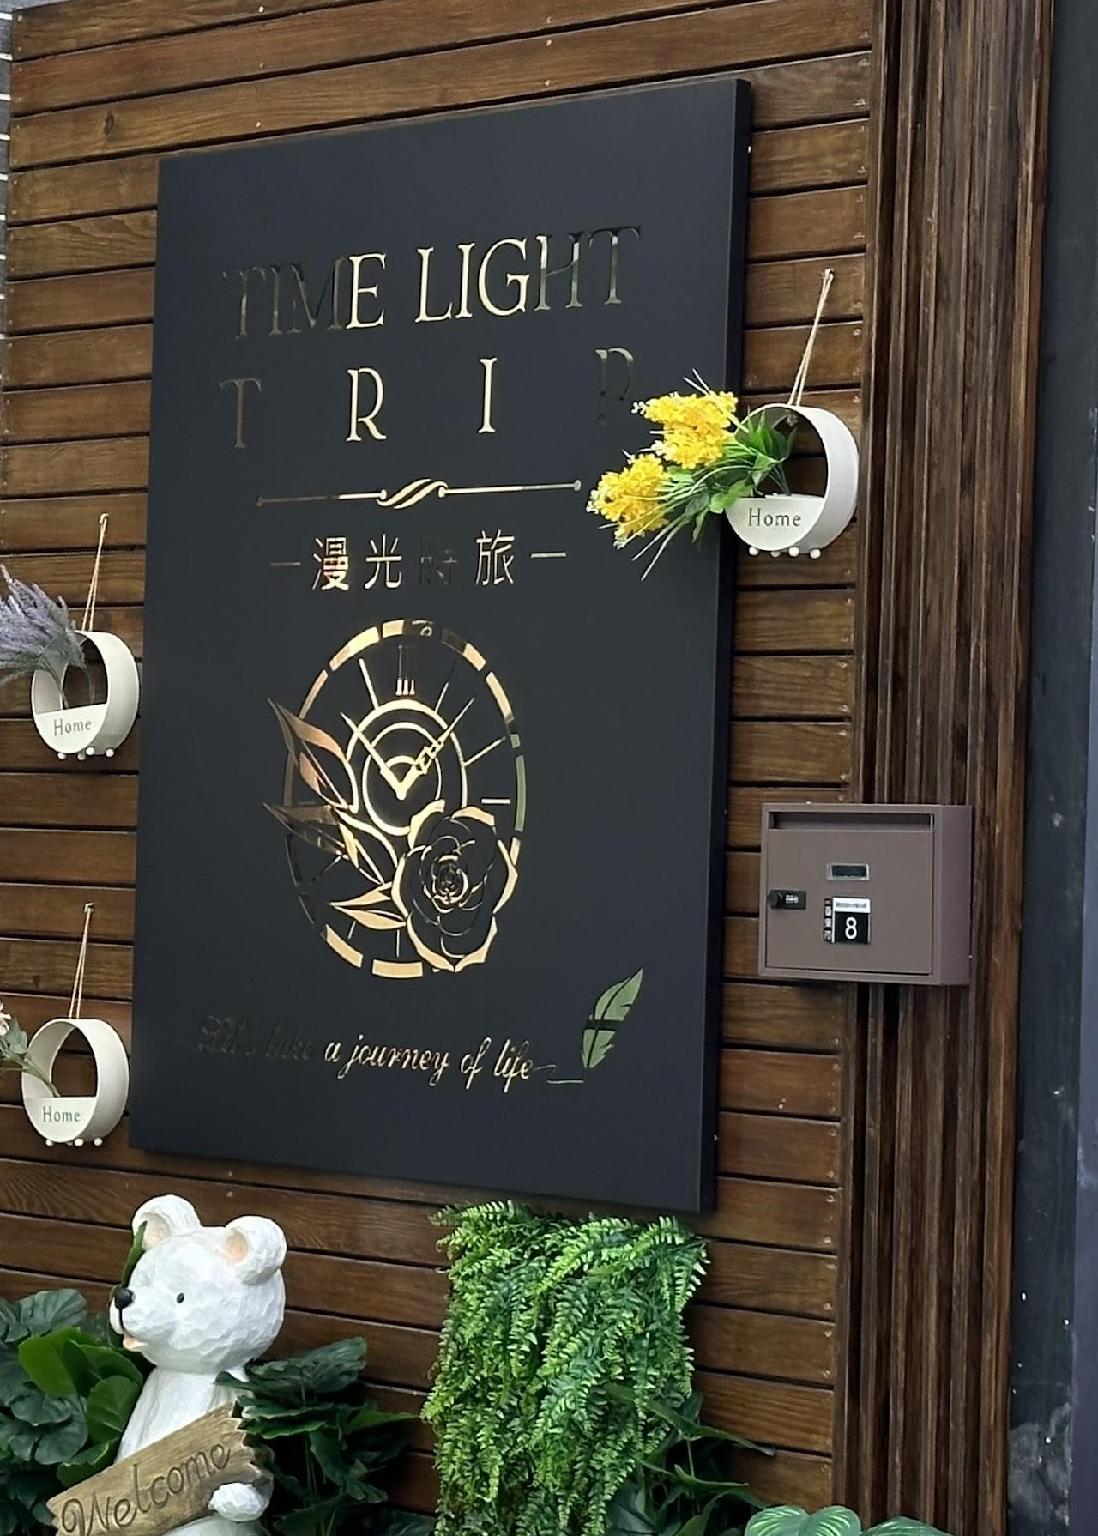 Time Light Trip - 台東縣